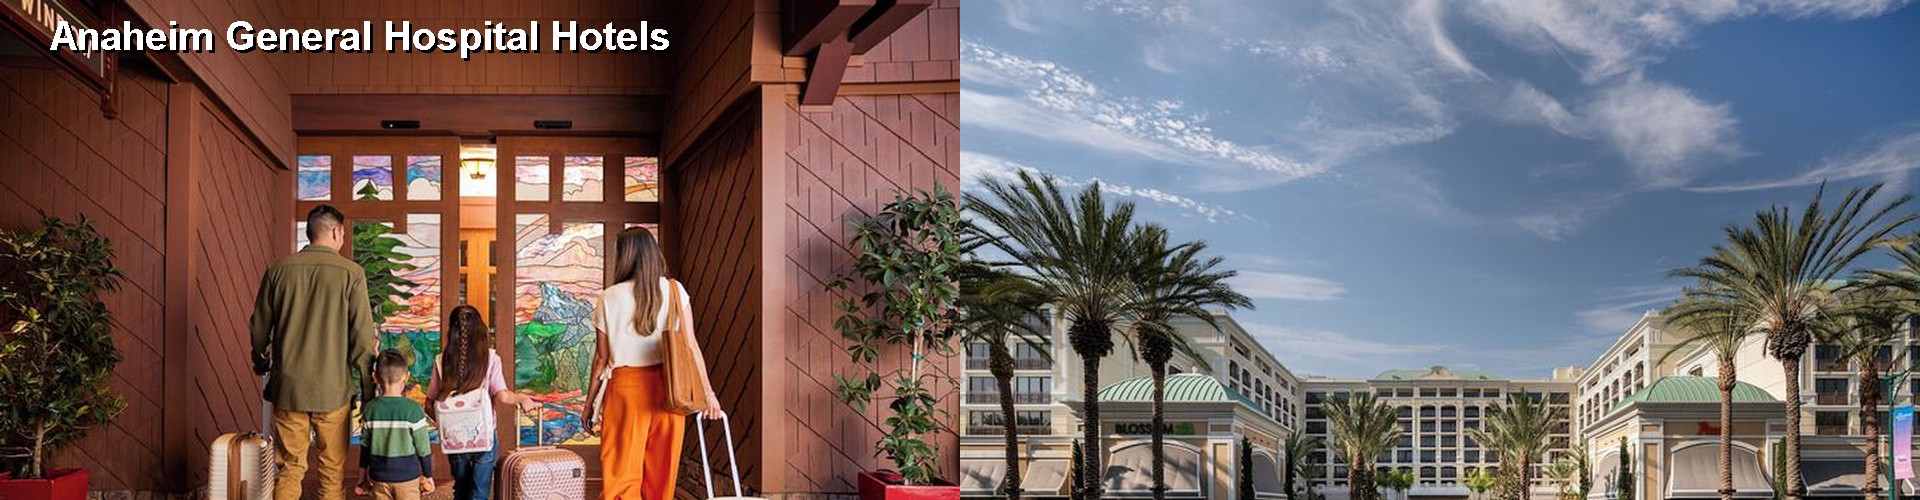 5 Best Hotels near Anaheim General Hospital